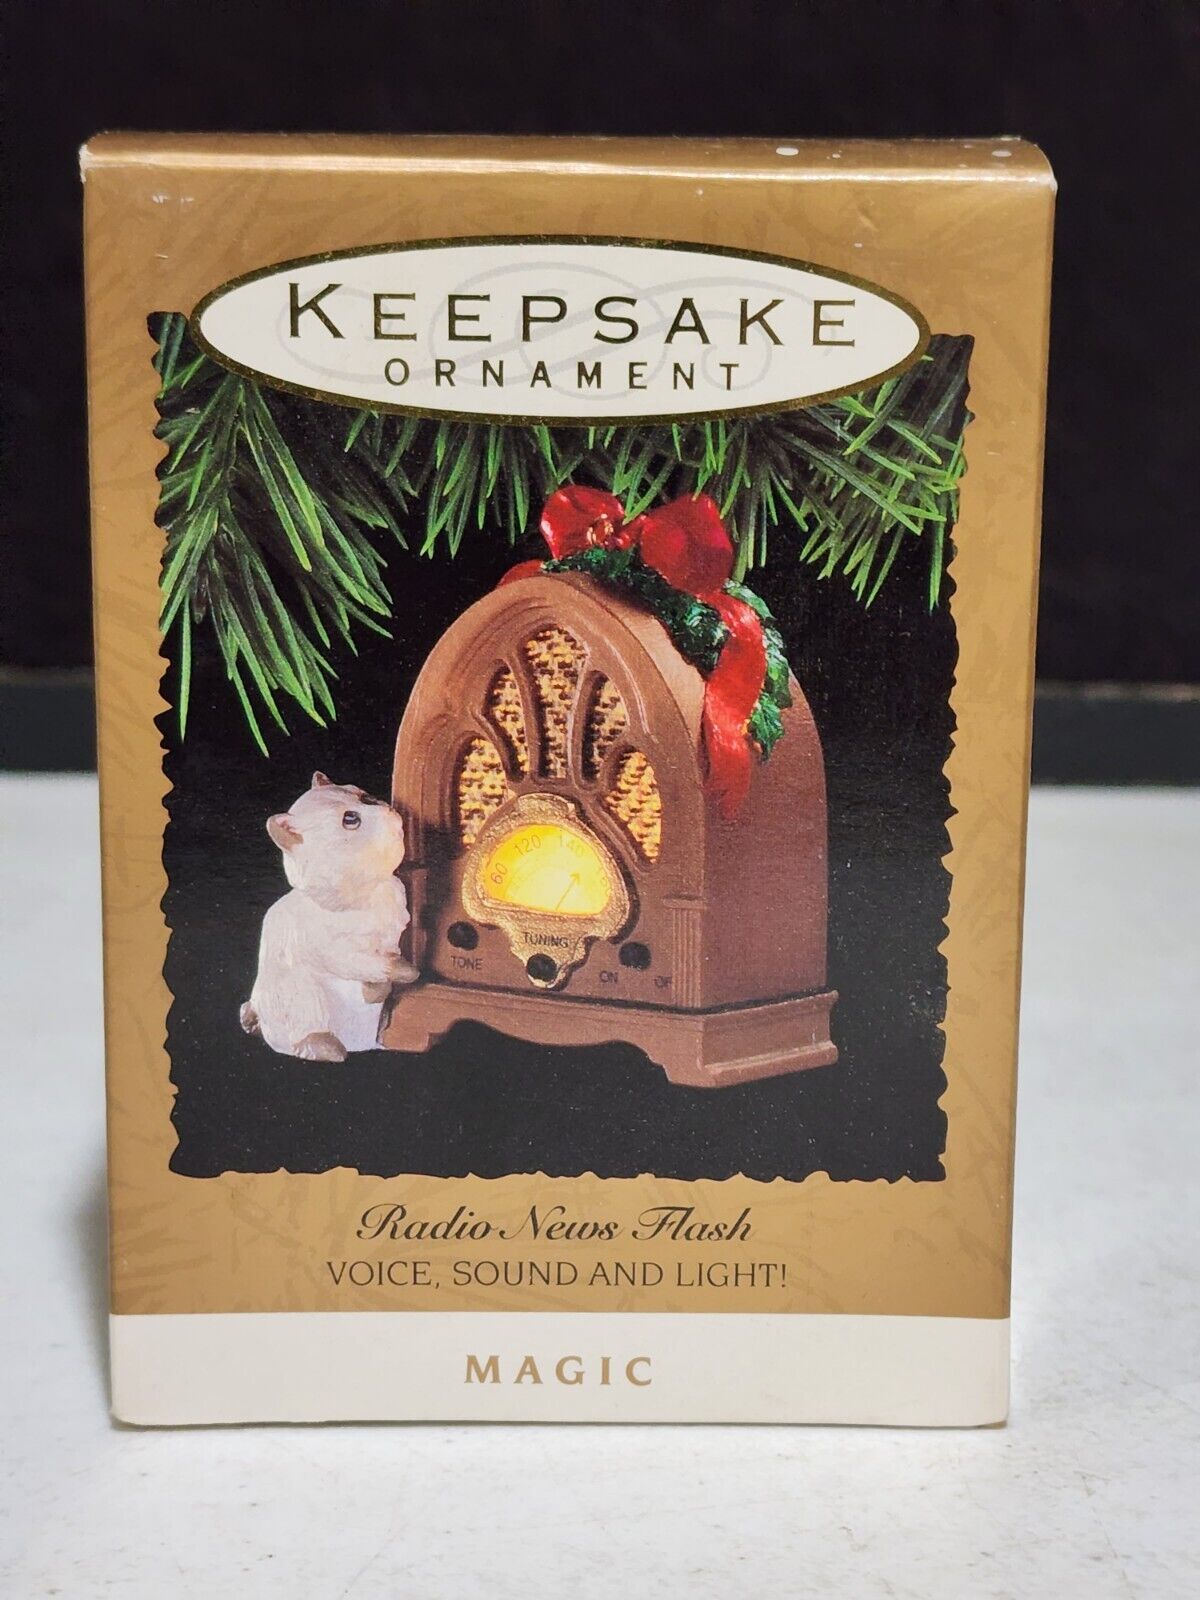 1993 Hallmark Keepsake Ornament Magic Sound And Light Radio News Flash IN BOX GR